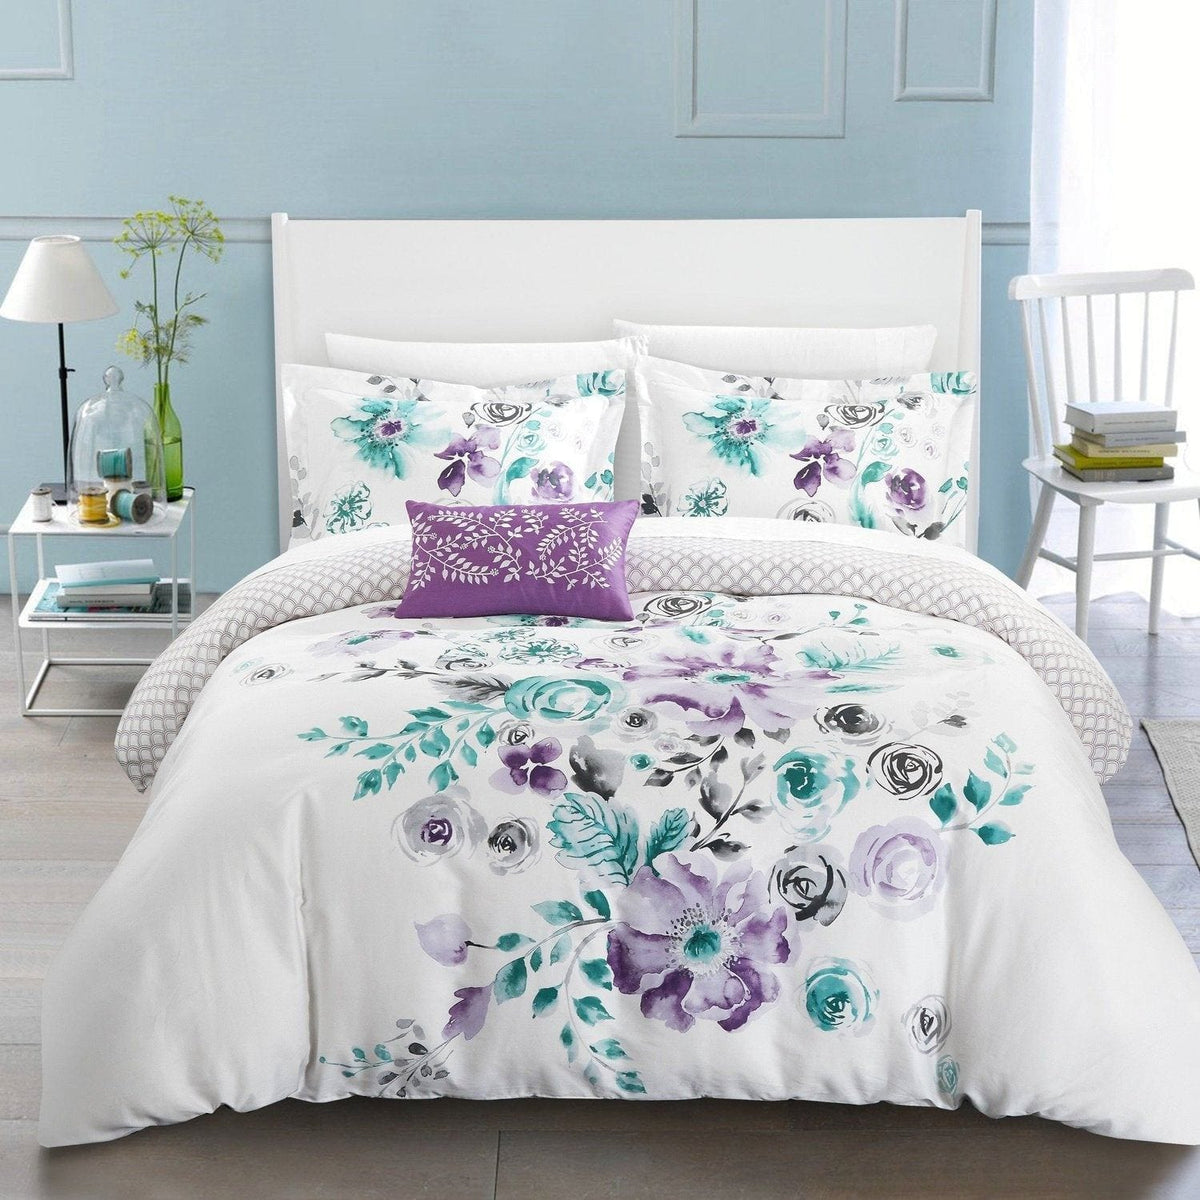 Chic Home Enchanted Garden 8 Piece Cotton Duvet Cover Set Lavender